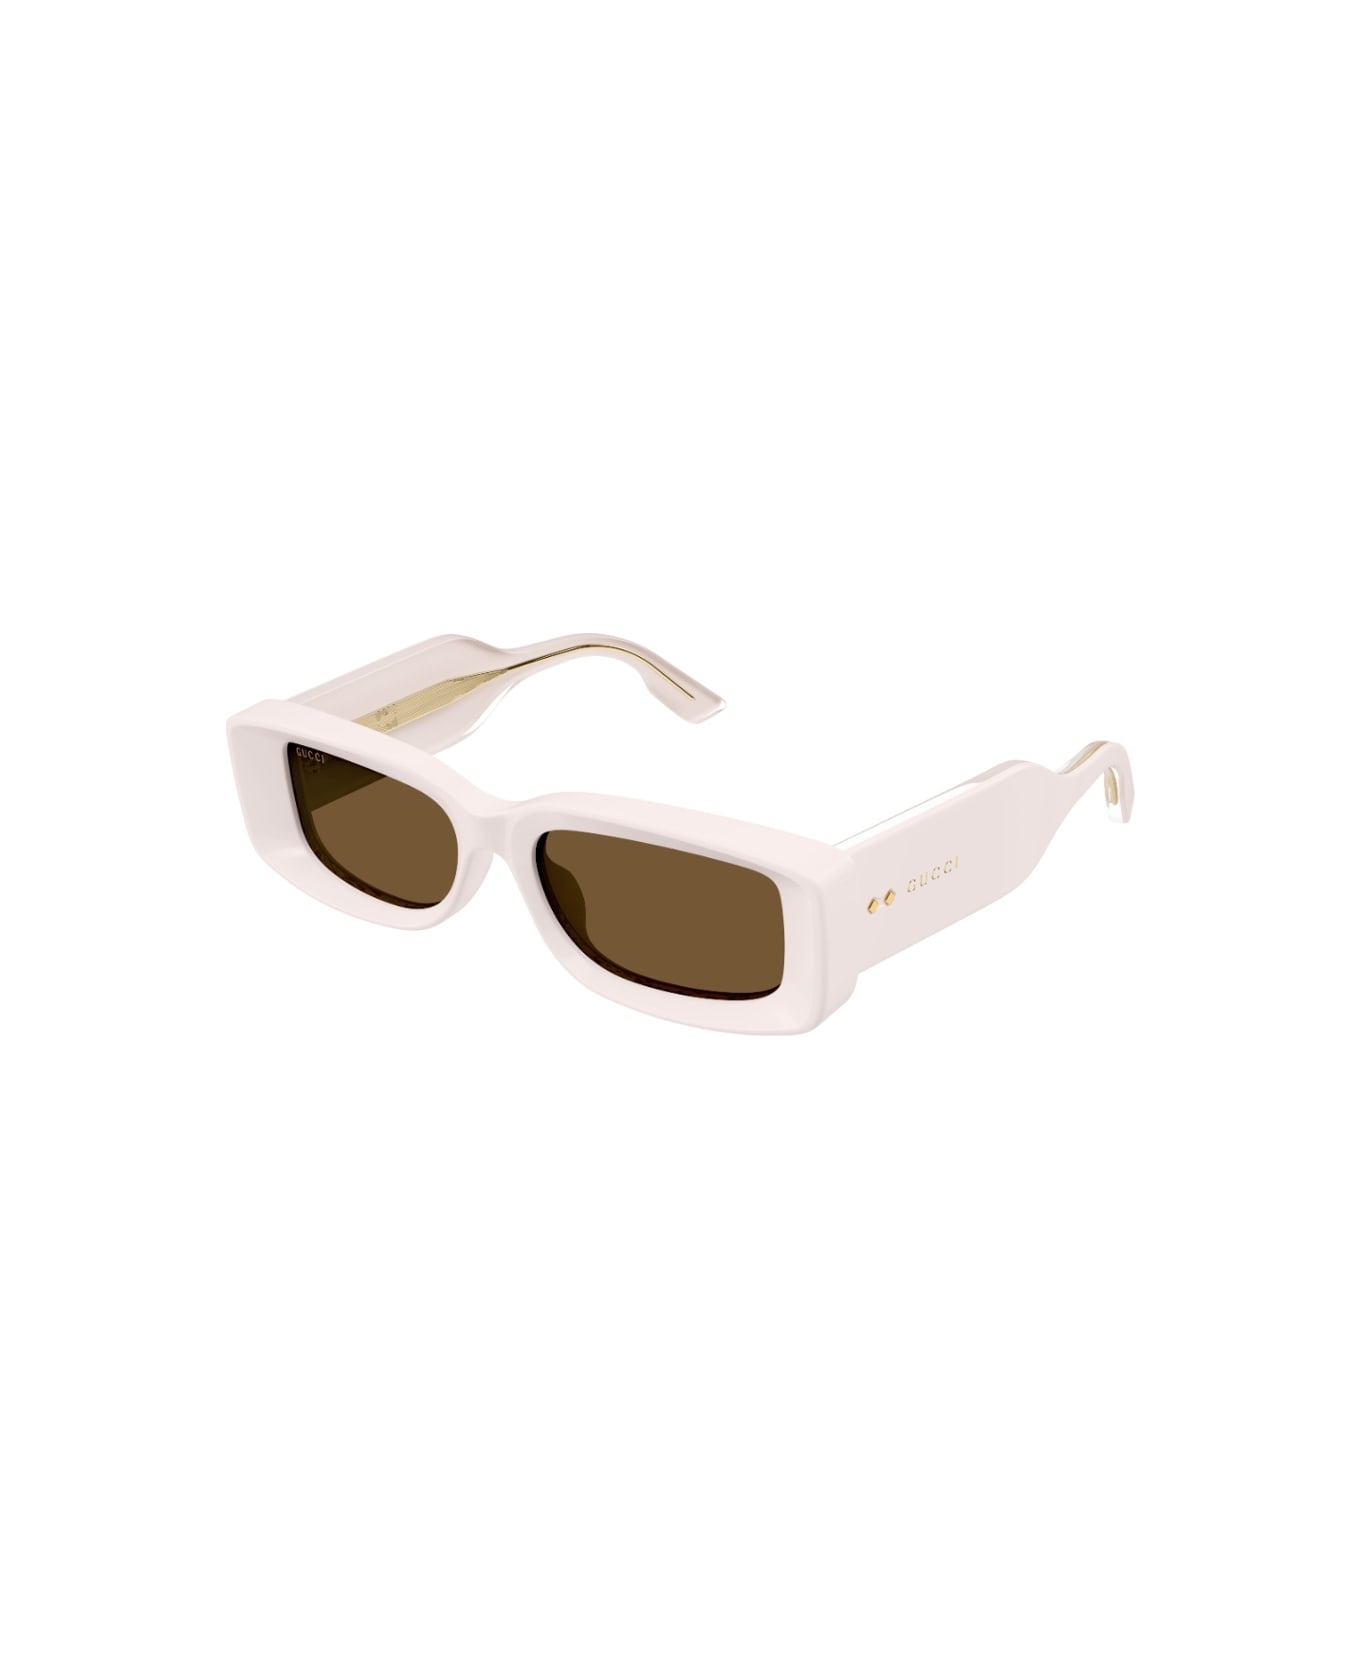 Gucci Eyewear GG15828s-003 Sunglasses - Panna